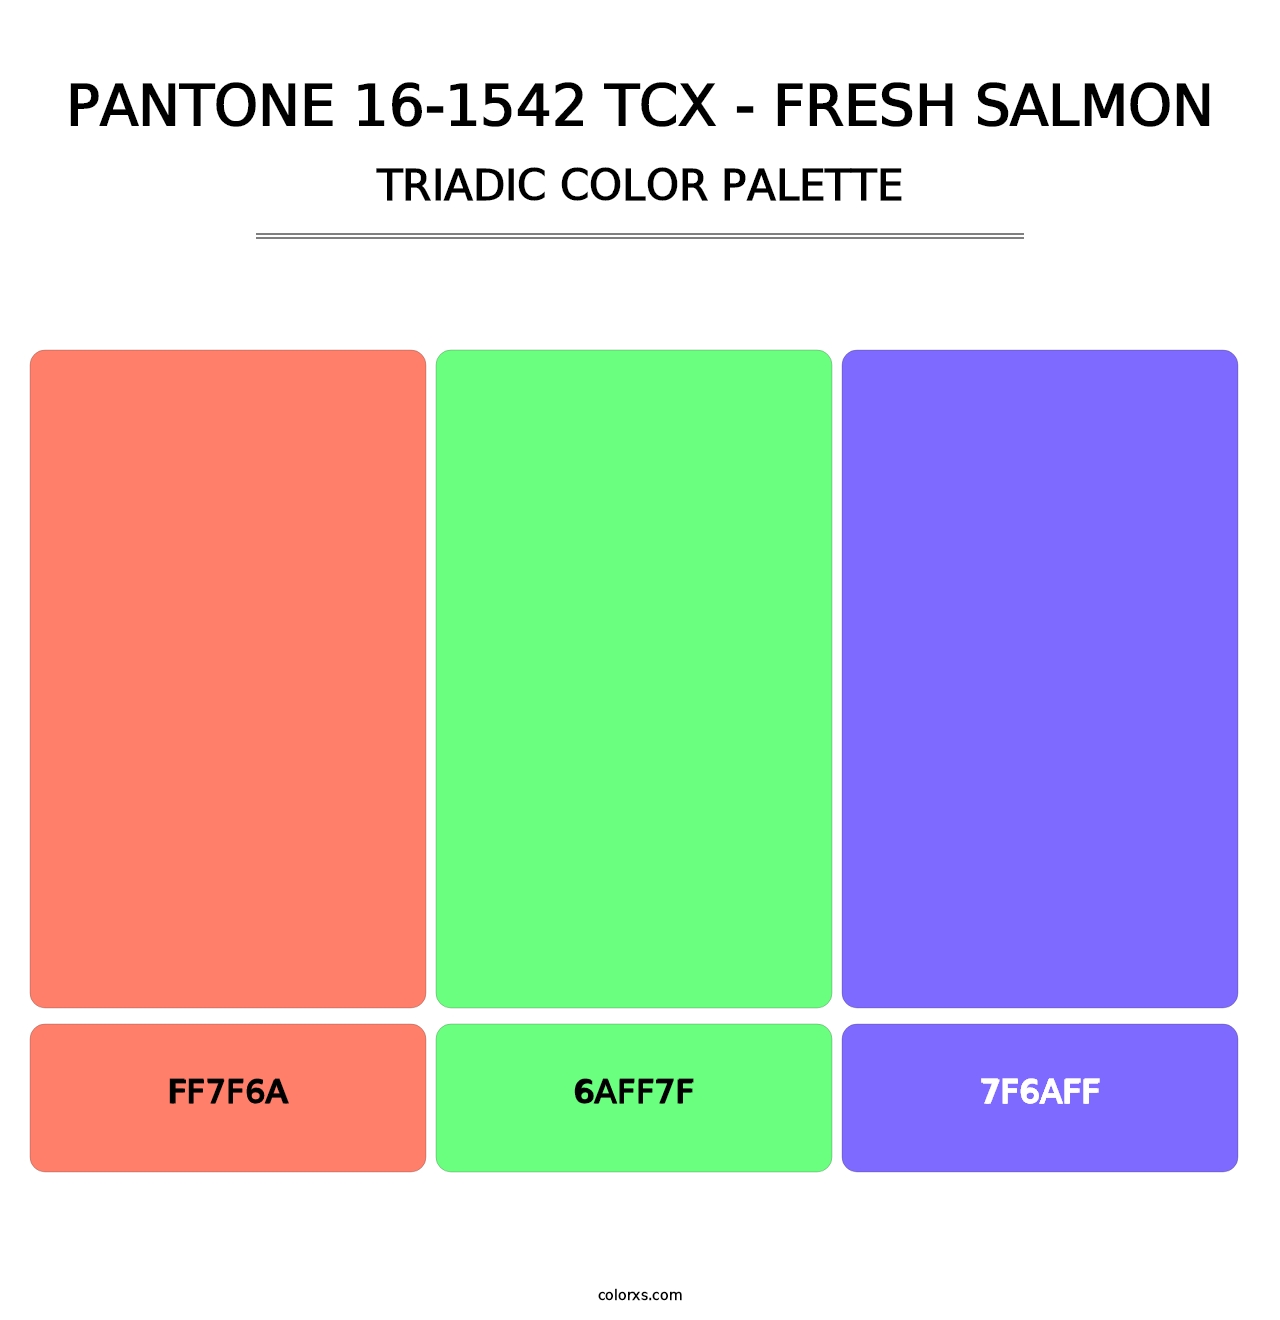 PANTONE 16-1542 TCX - Fresh Salmon - Triadic Color Palette